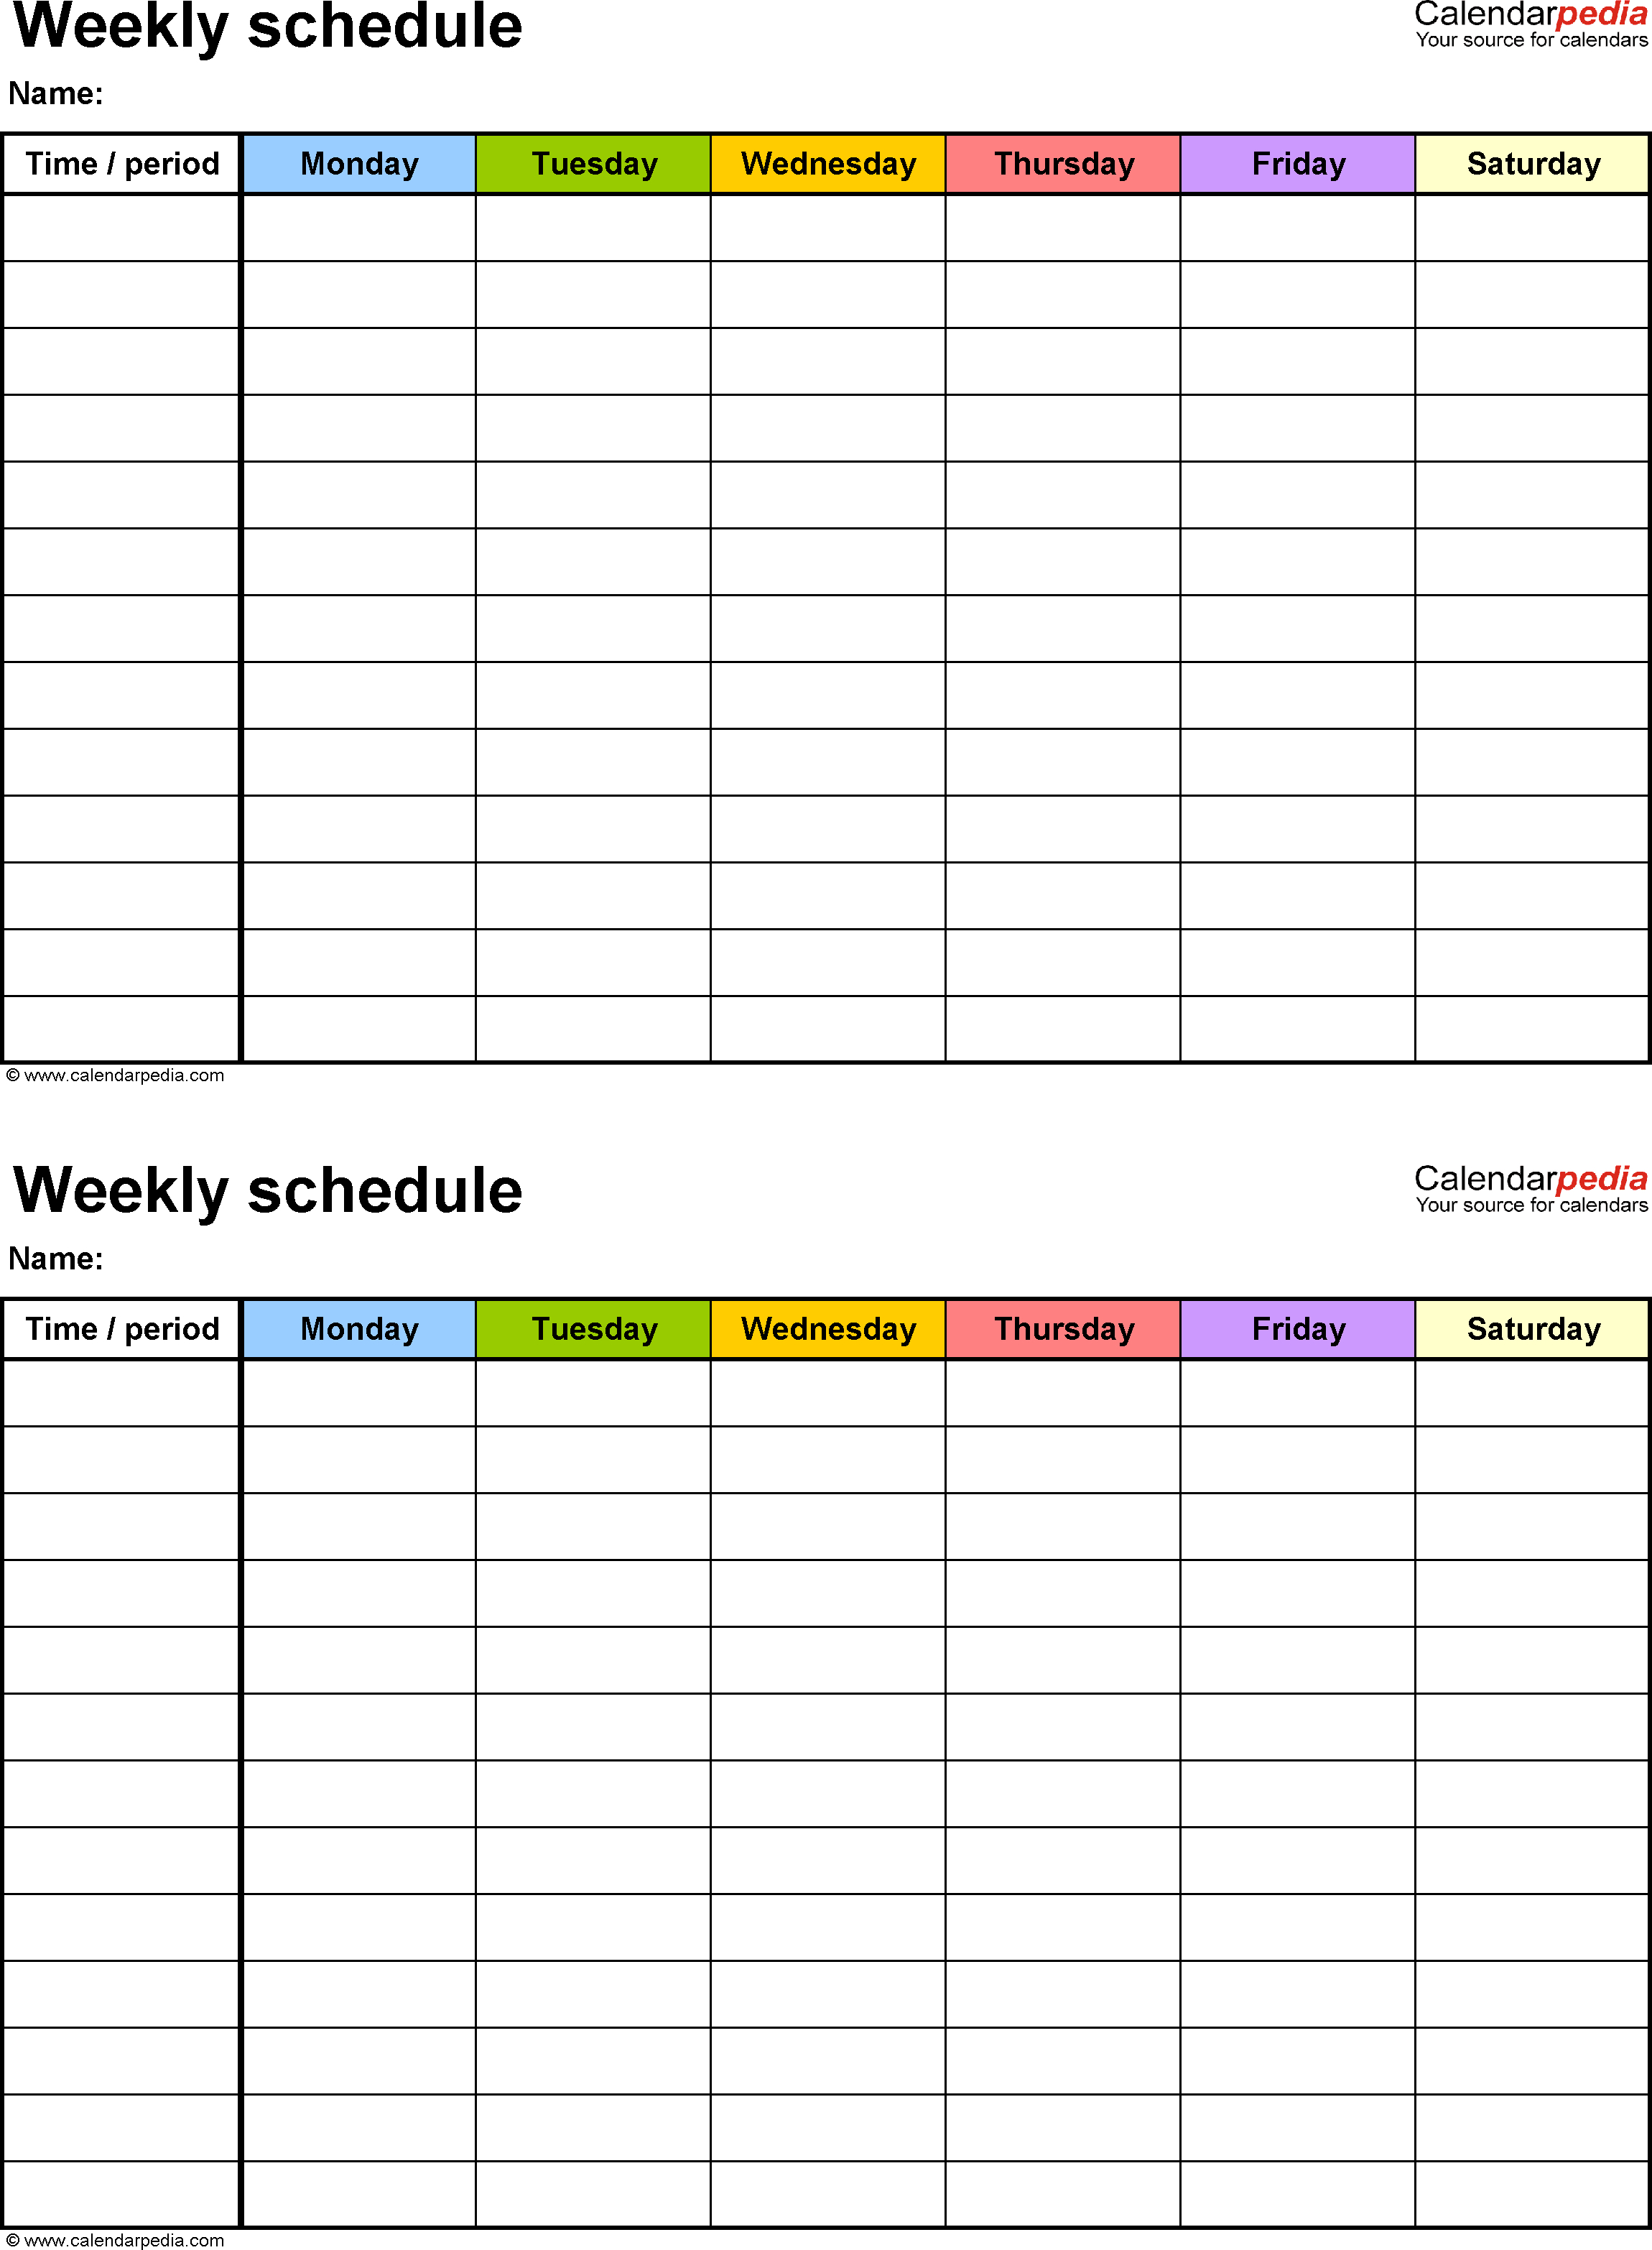 One Week Calendar Template Excel - Wpa.wpart.co